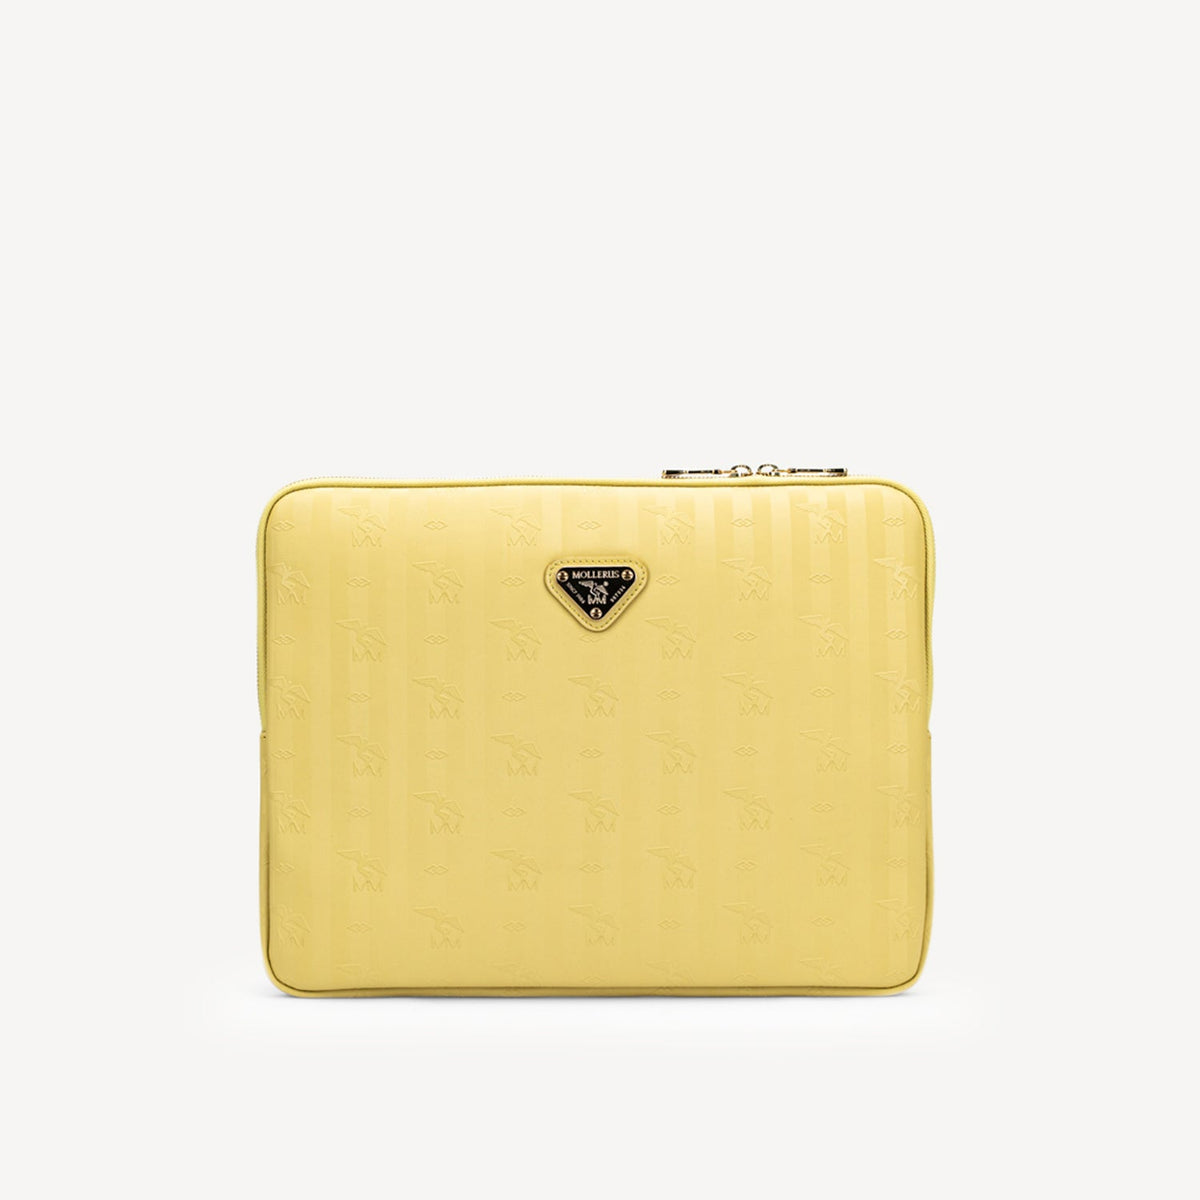 ROETI | Laptop case light yellow/gold